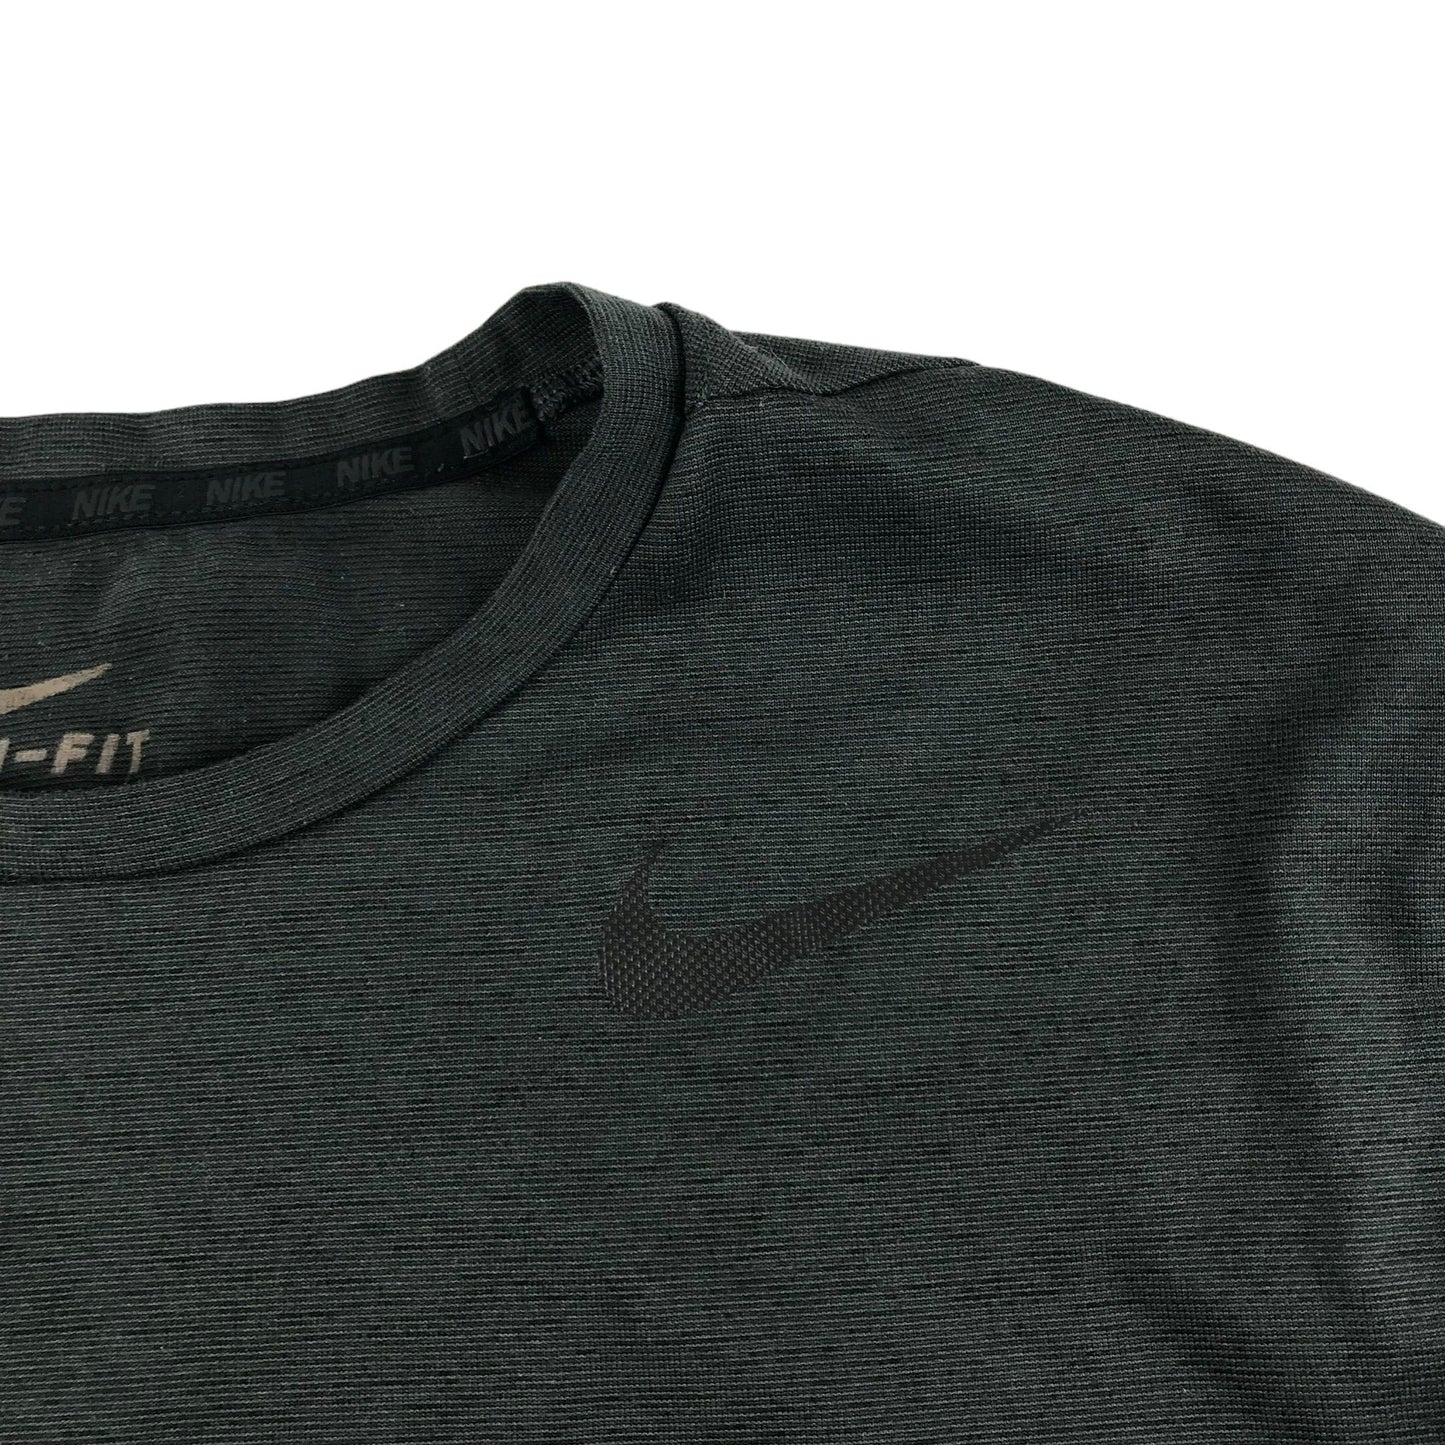 Nike Sport Top Size Medium Grey Long Sleeve Plain